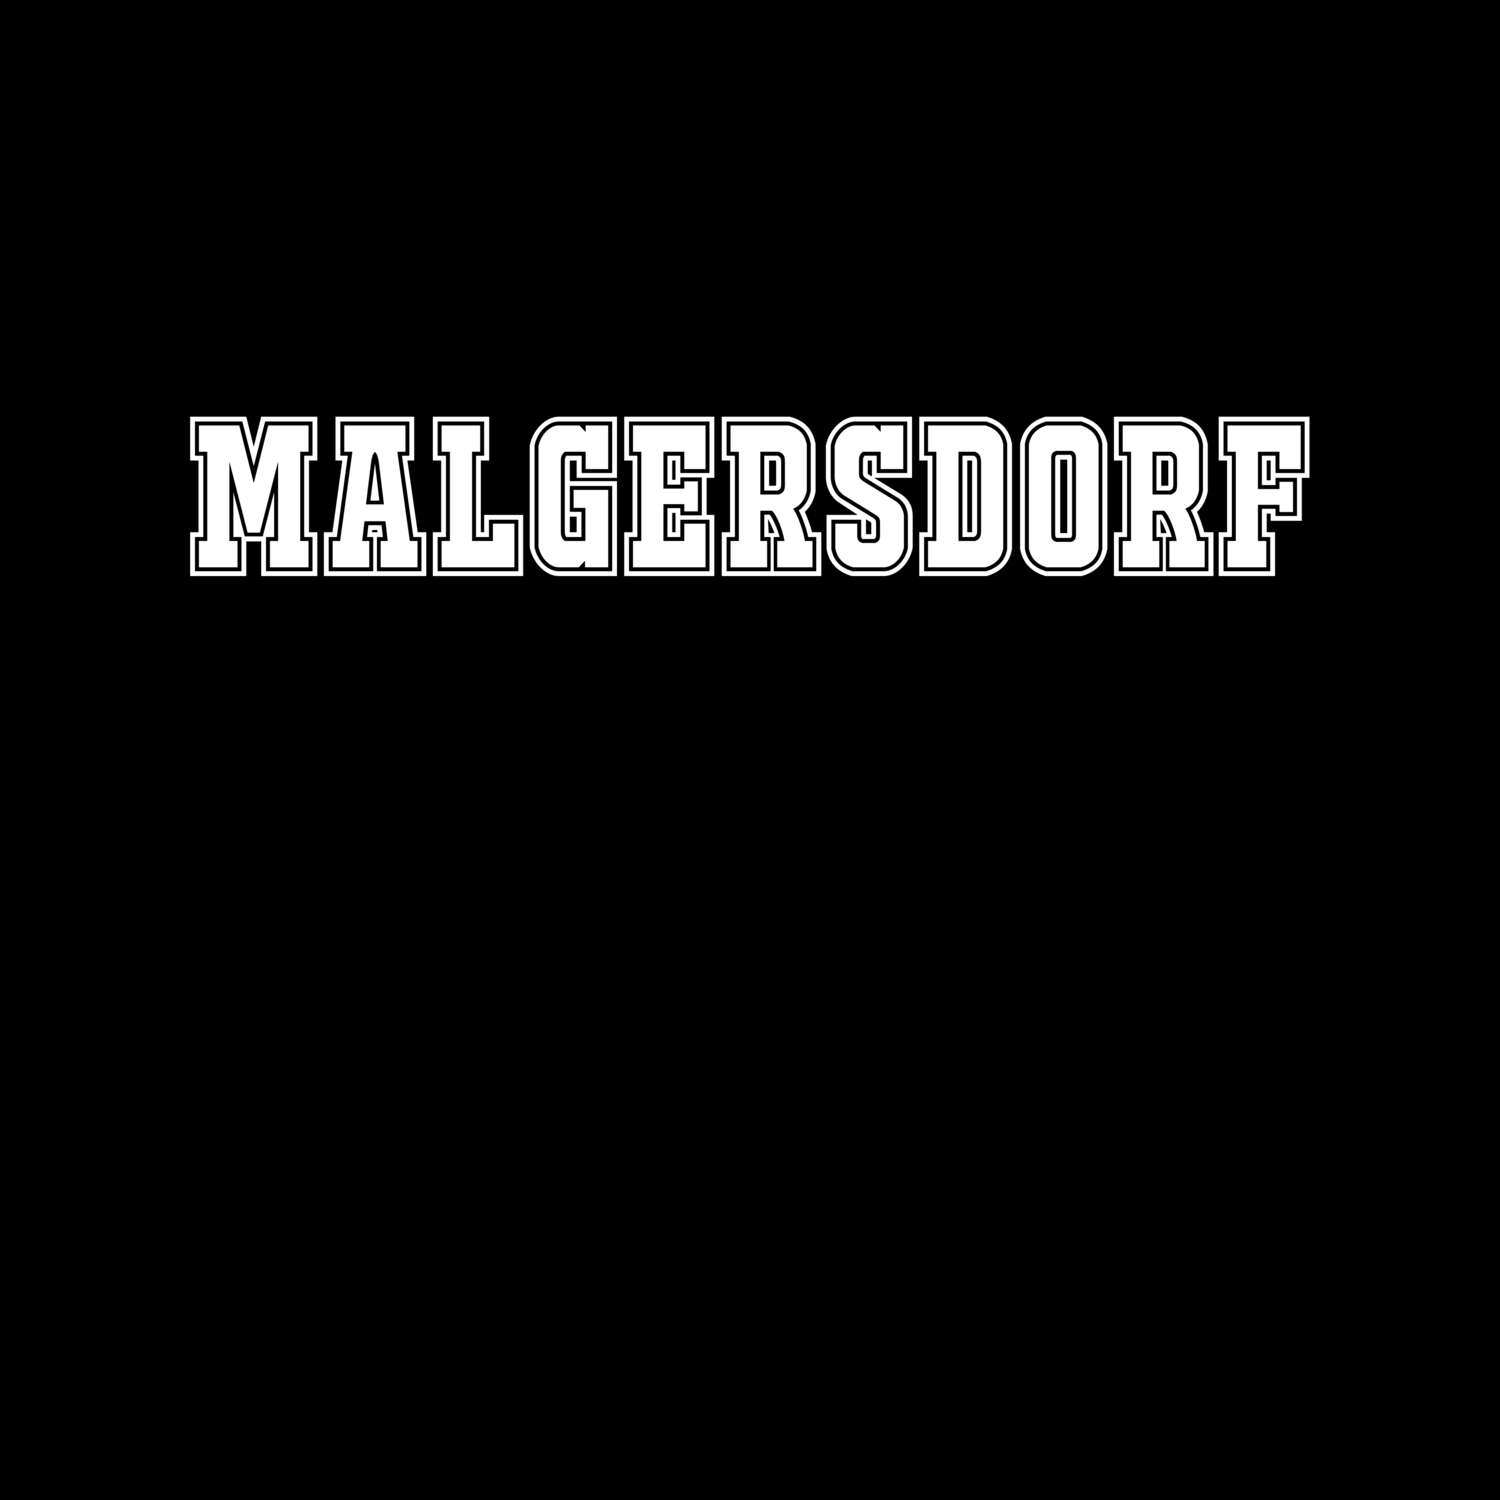 Malgersdorf T-Shirt »Classic«